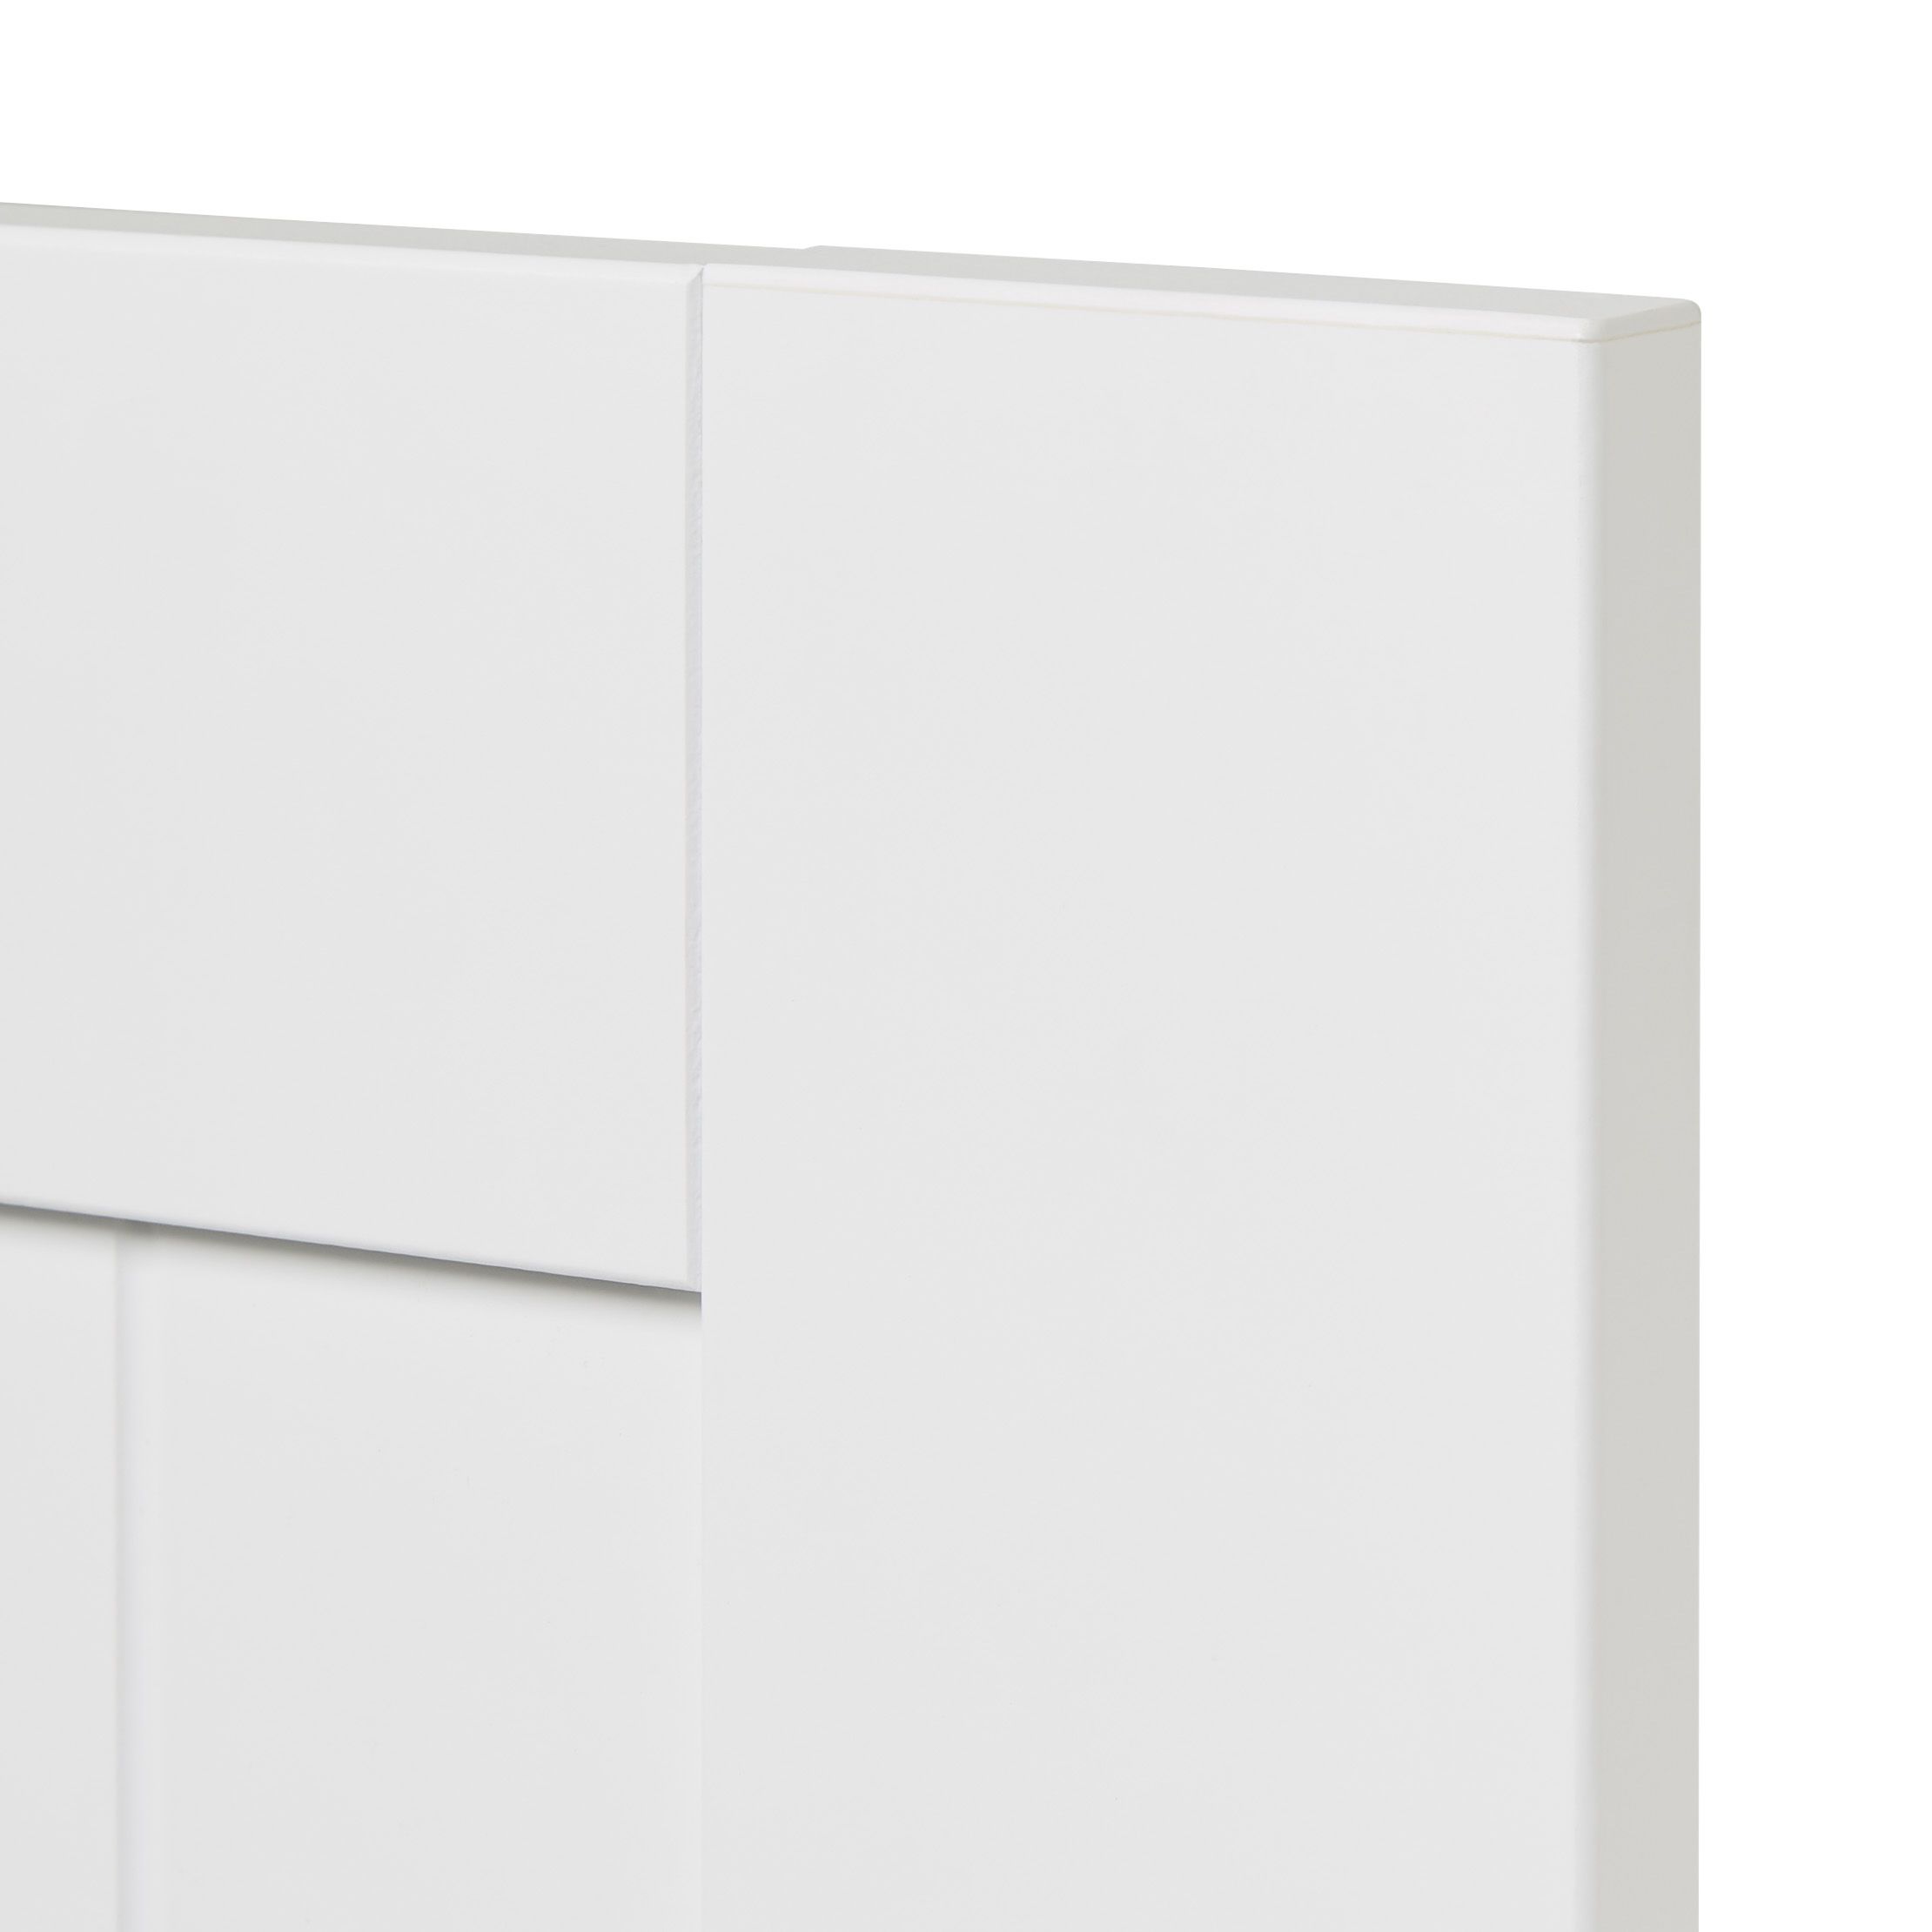 GoodHome Alpinia Matt white tongue & groove shaker Tall wall Cabinet door (W)250mm (H)895mm (T)18mm